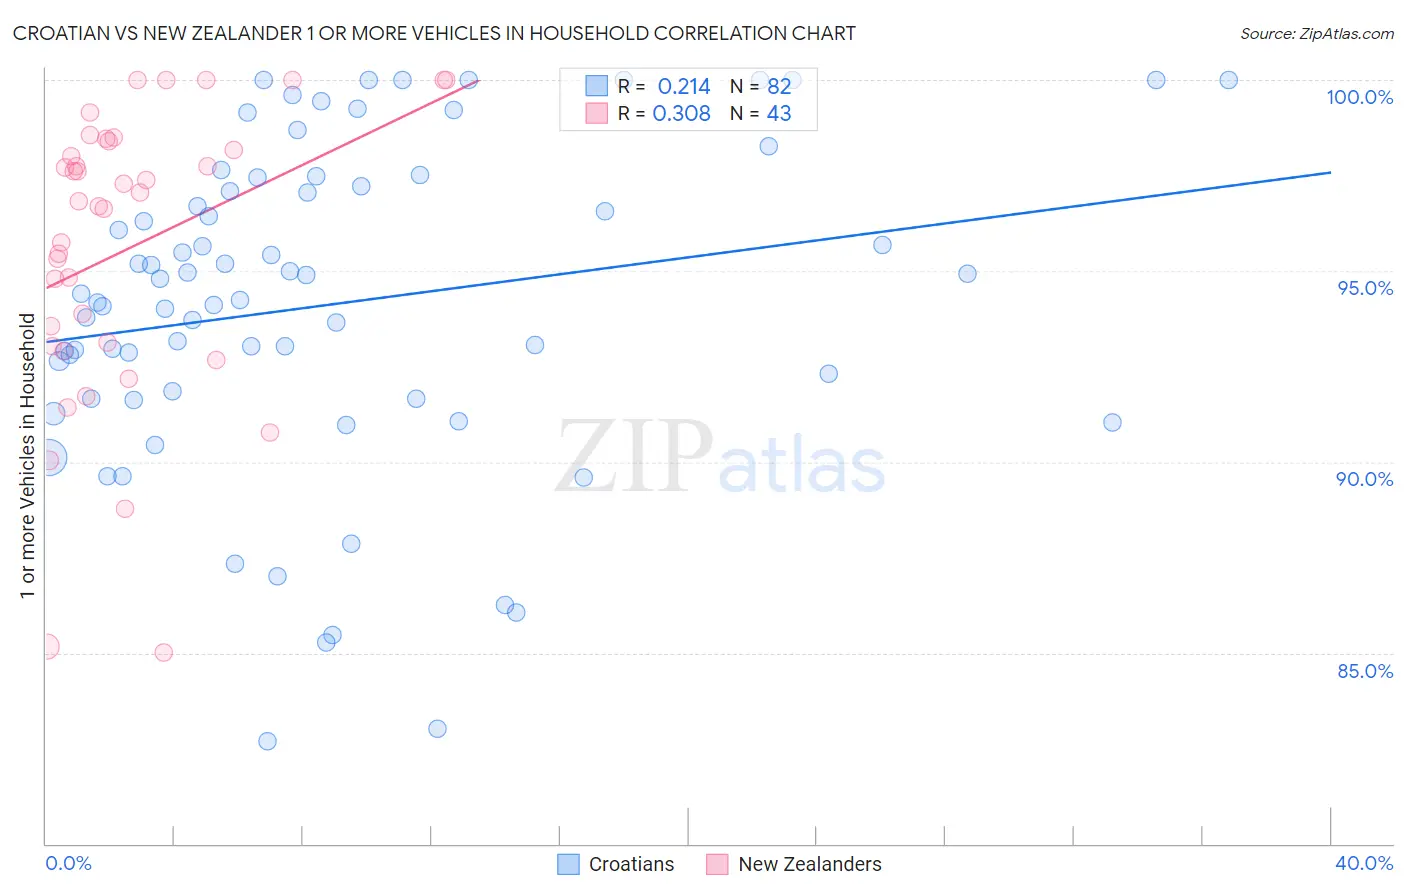 Croatian vs New Zealander 1 or more Vehicles in Household